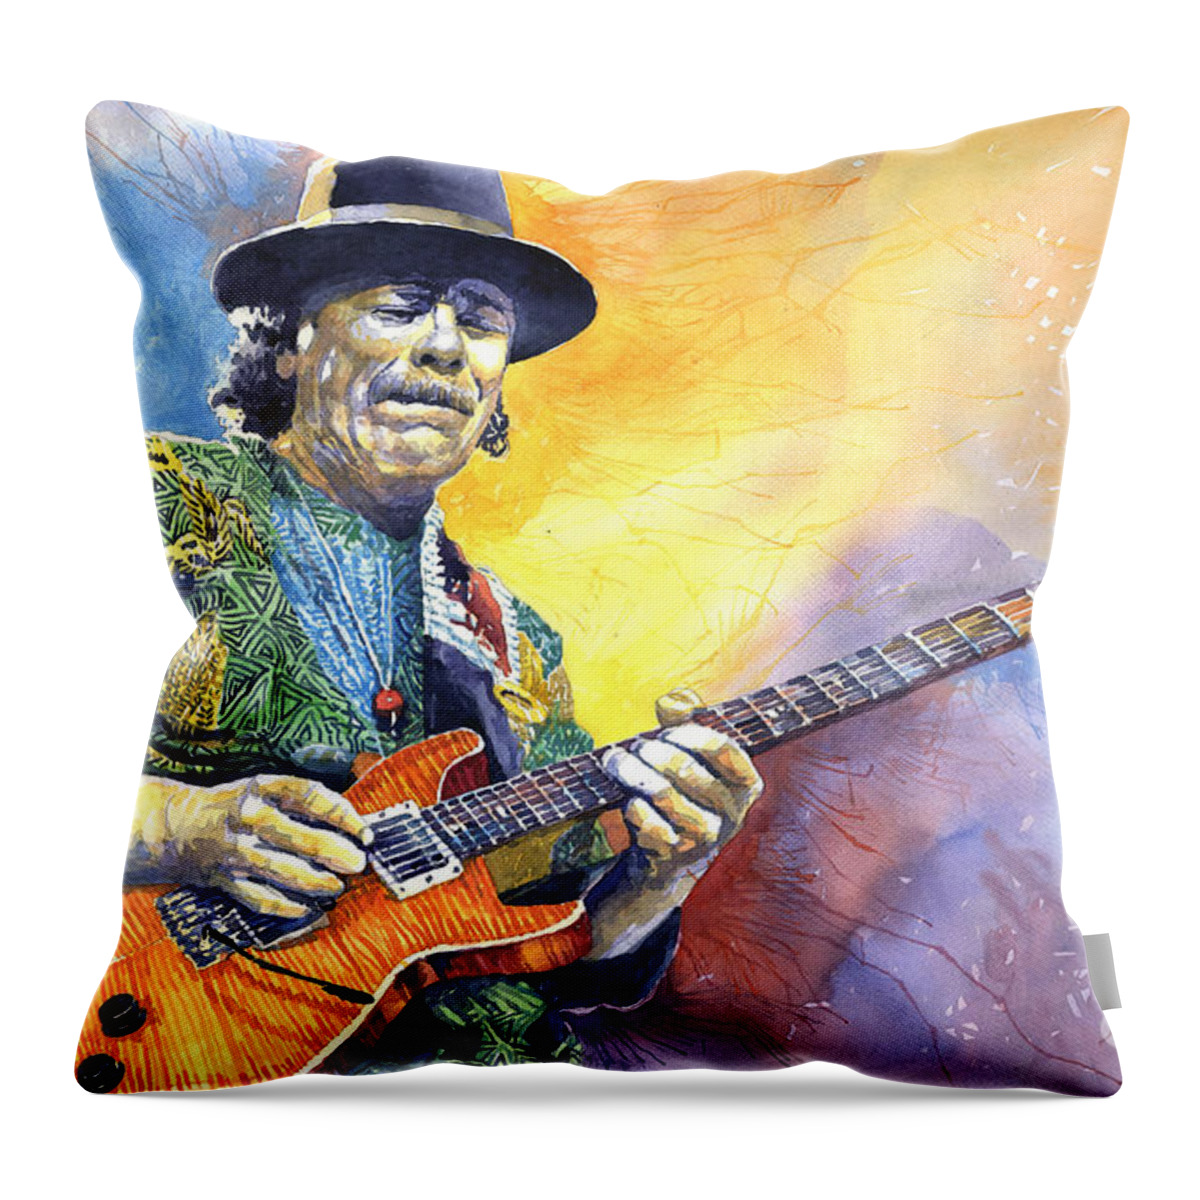 Watercolor Throw Pillow featuring the painting Carlos Santana by Yuriy Shevchuk